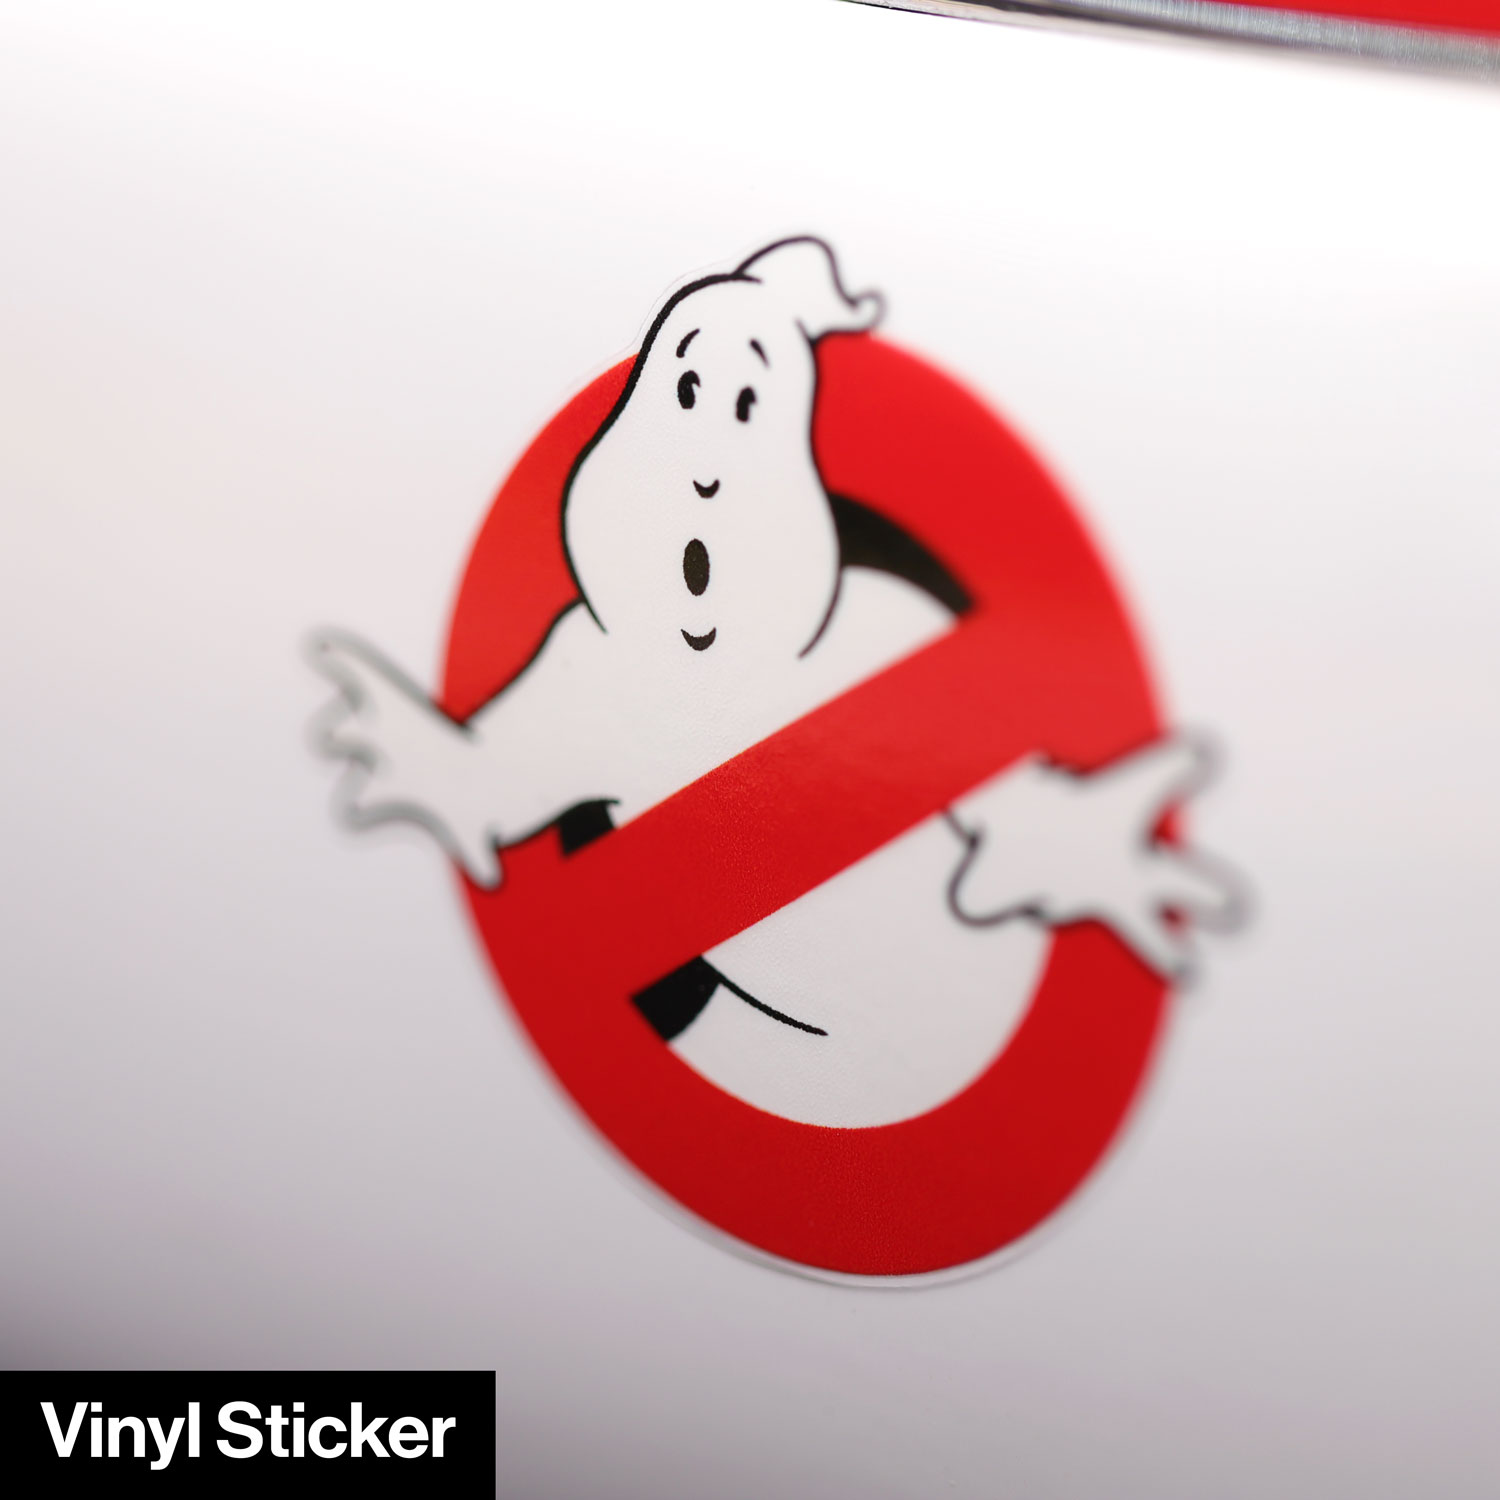 Ecto-1 No-ghost vinyl sticker mod